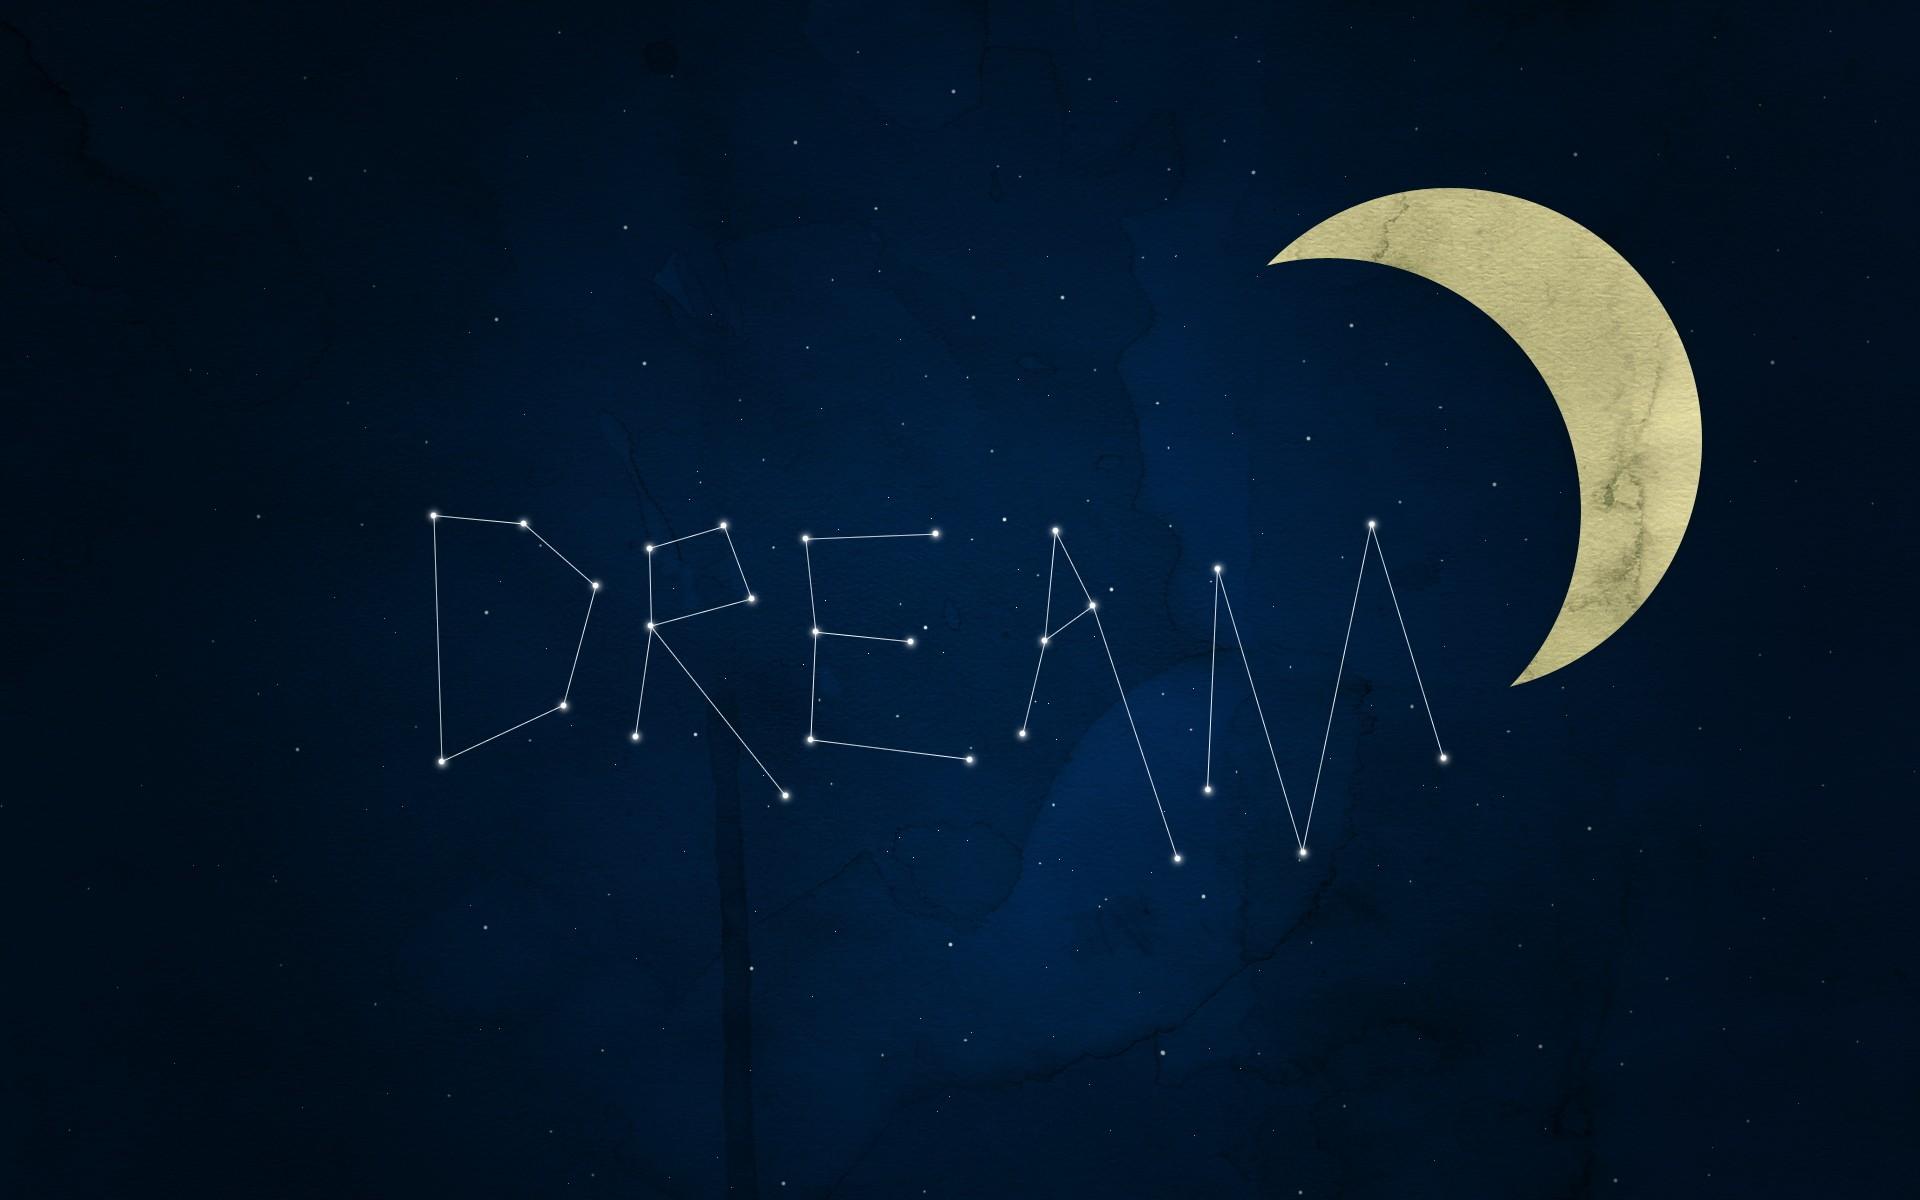 typography, dreams, night sky, Constellations, crescent moon